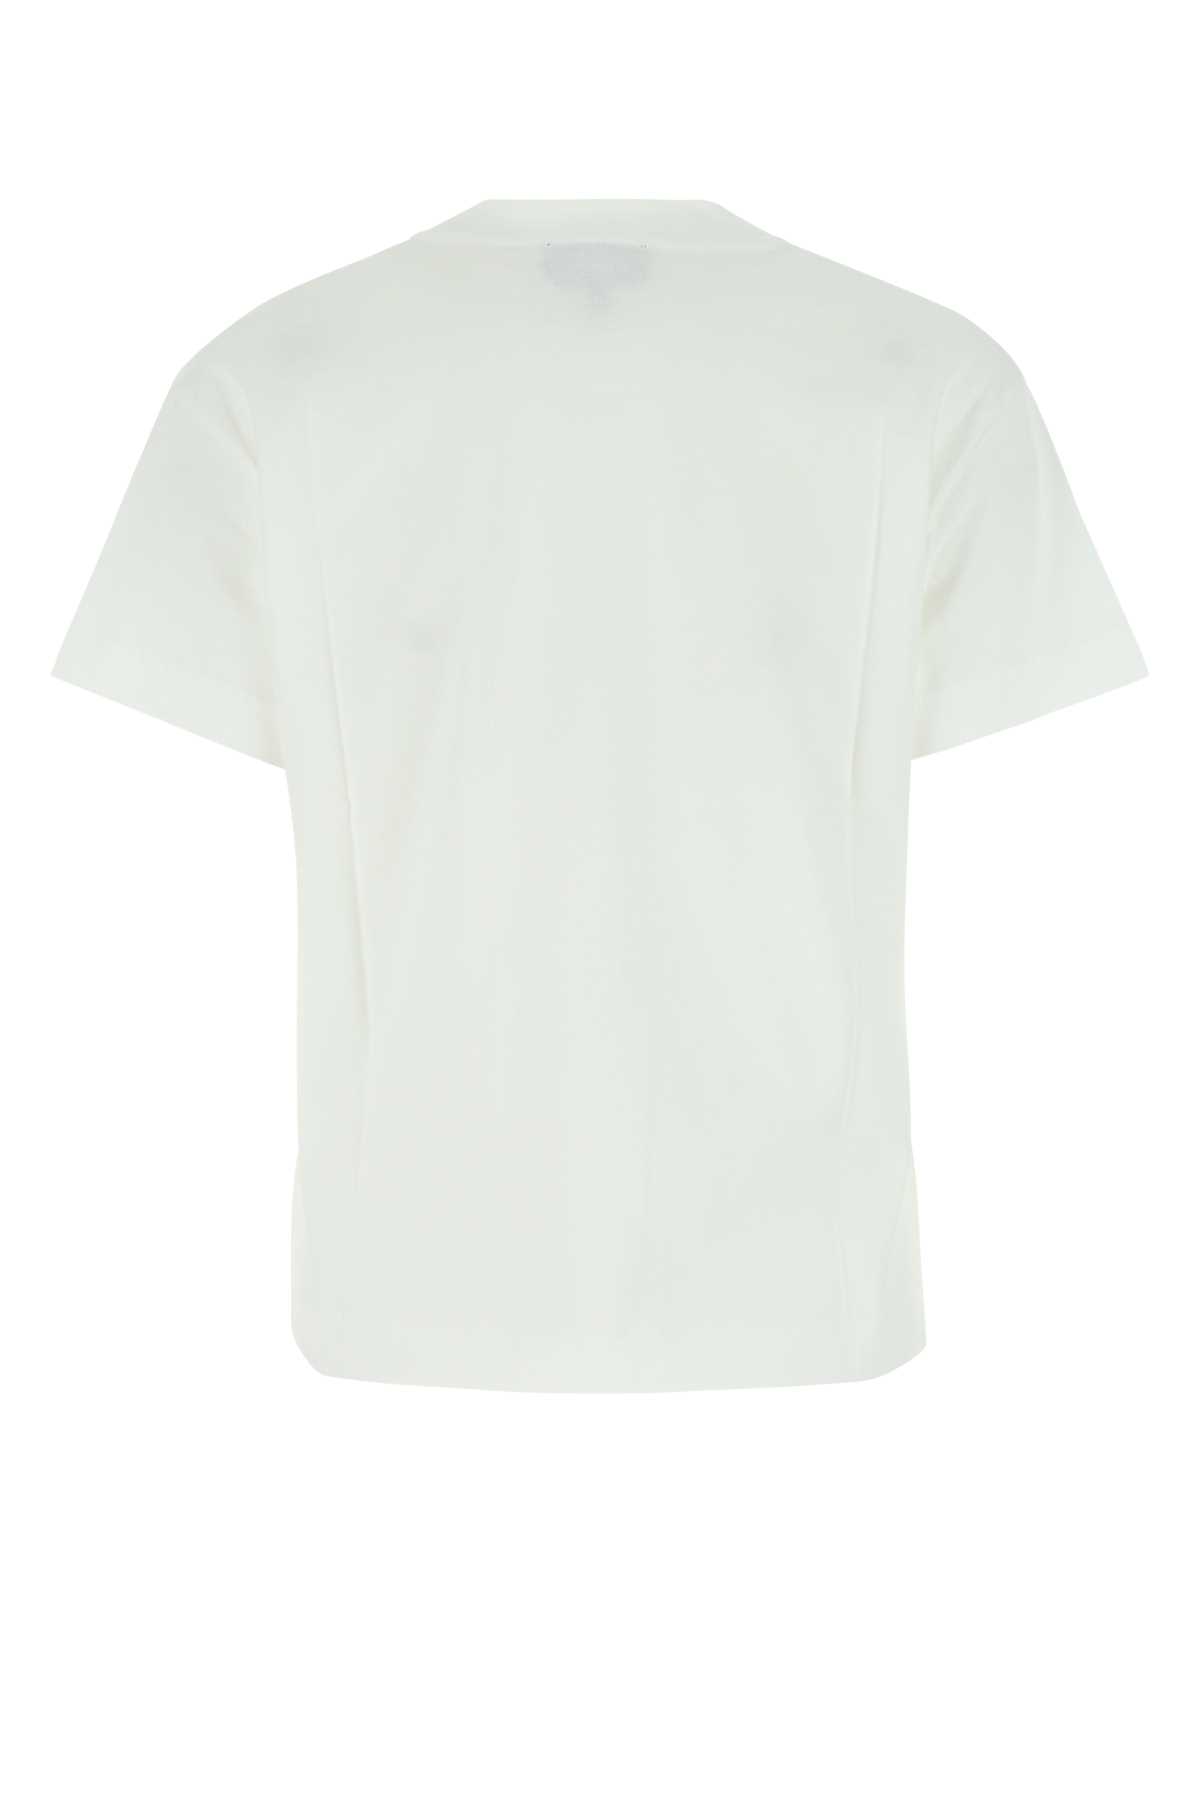 Apc White Cotton T-shirt